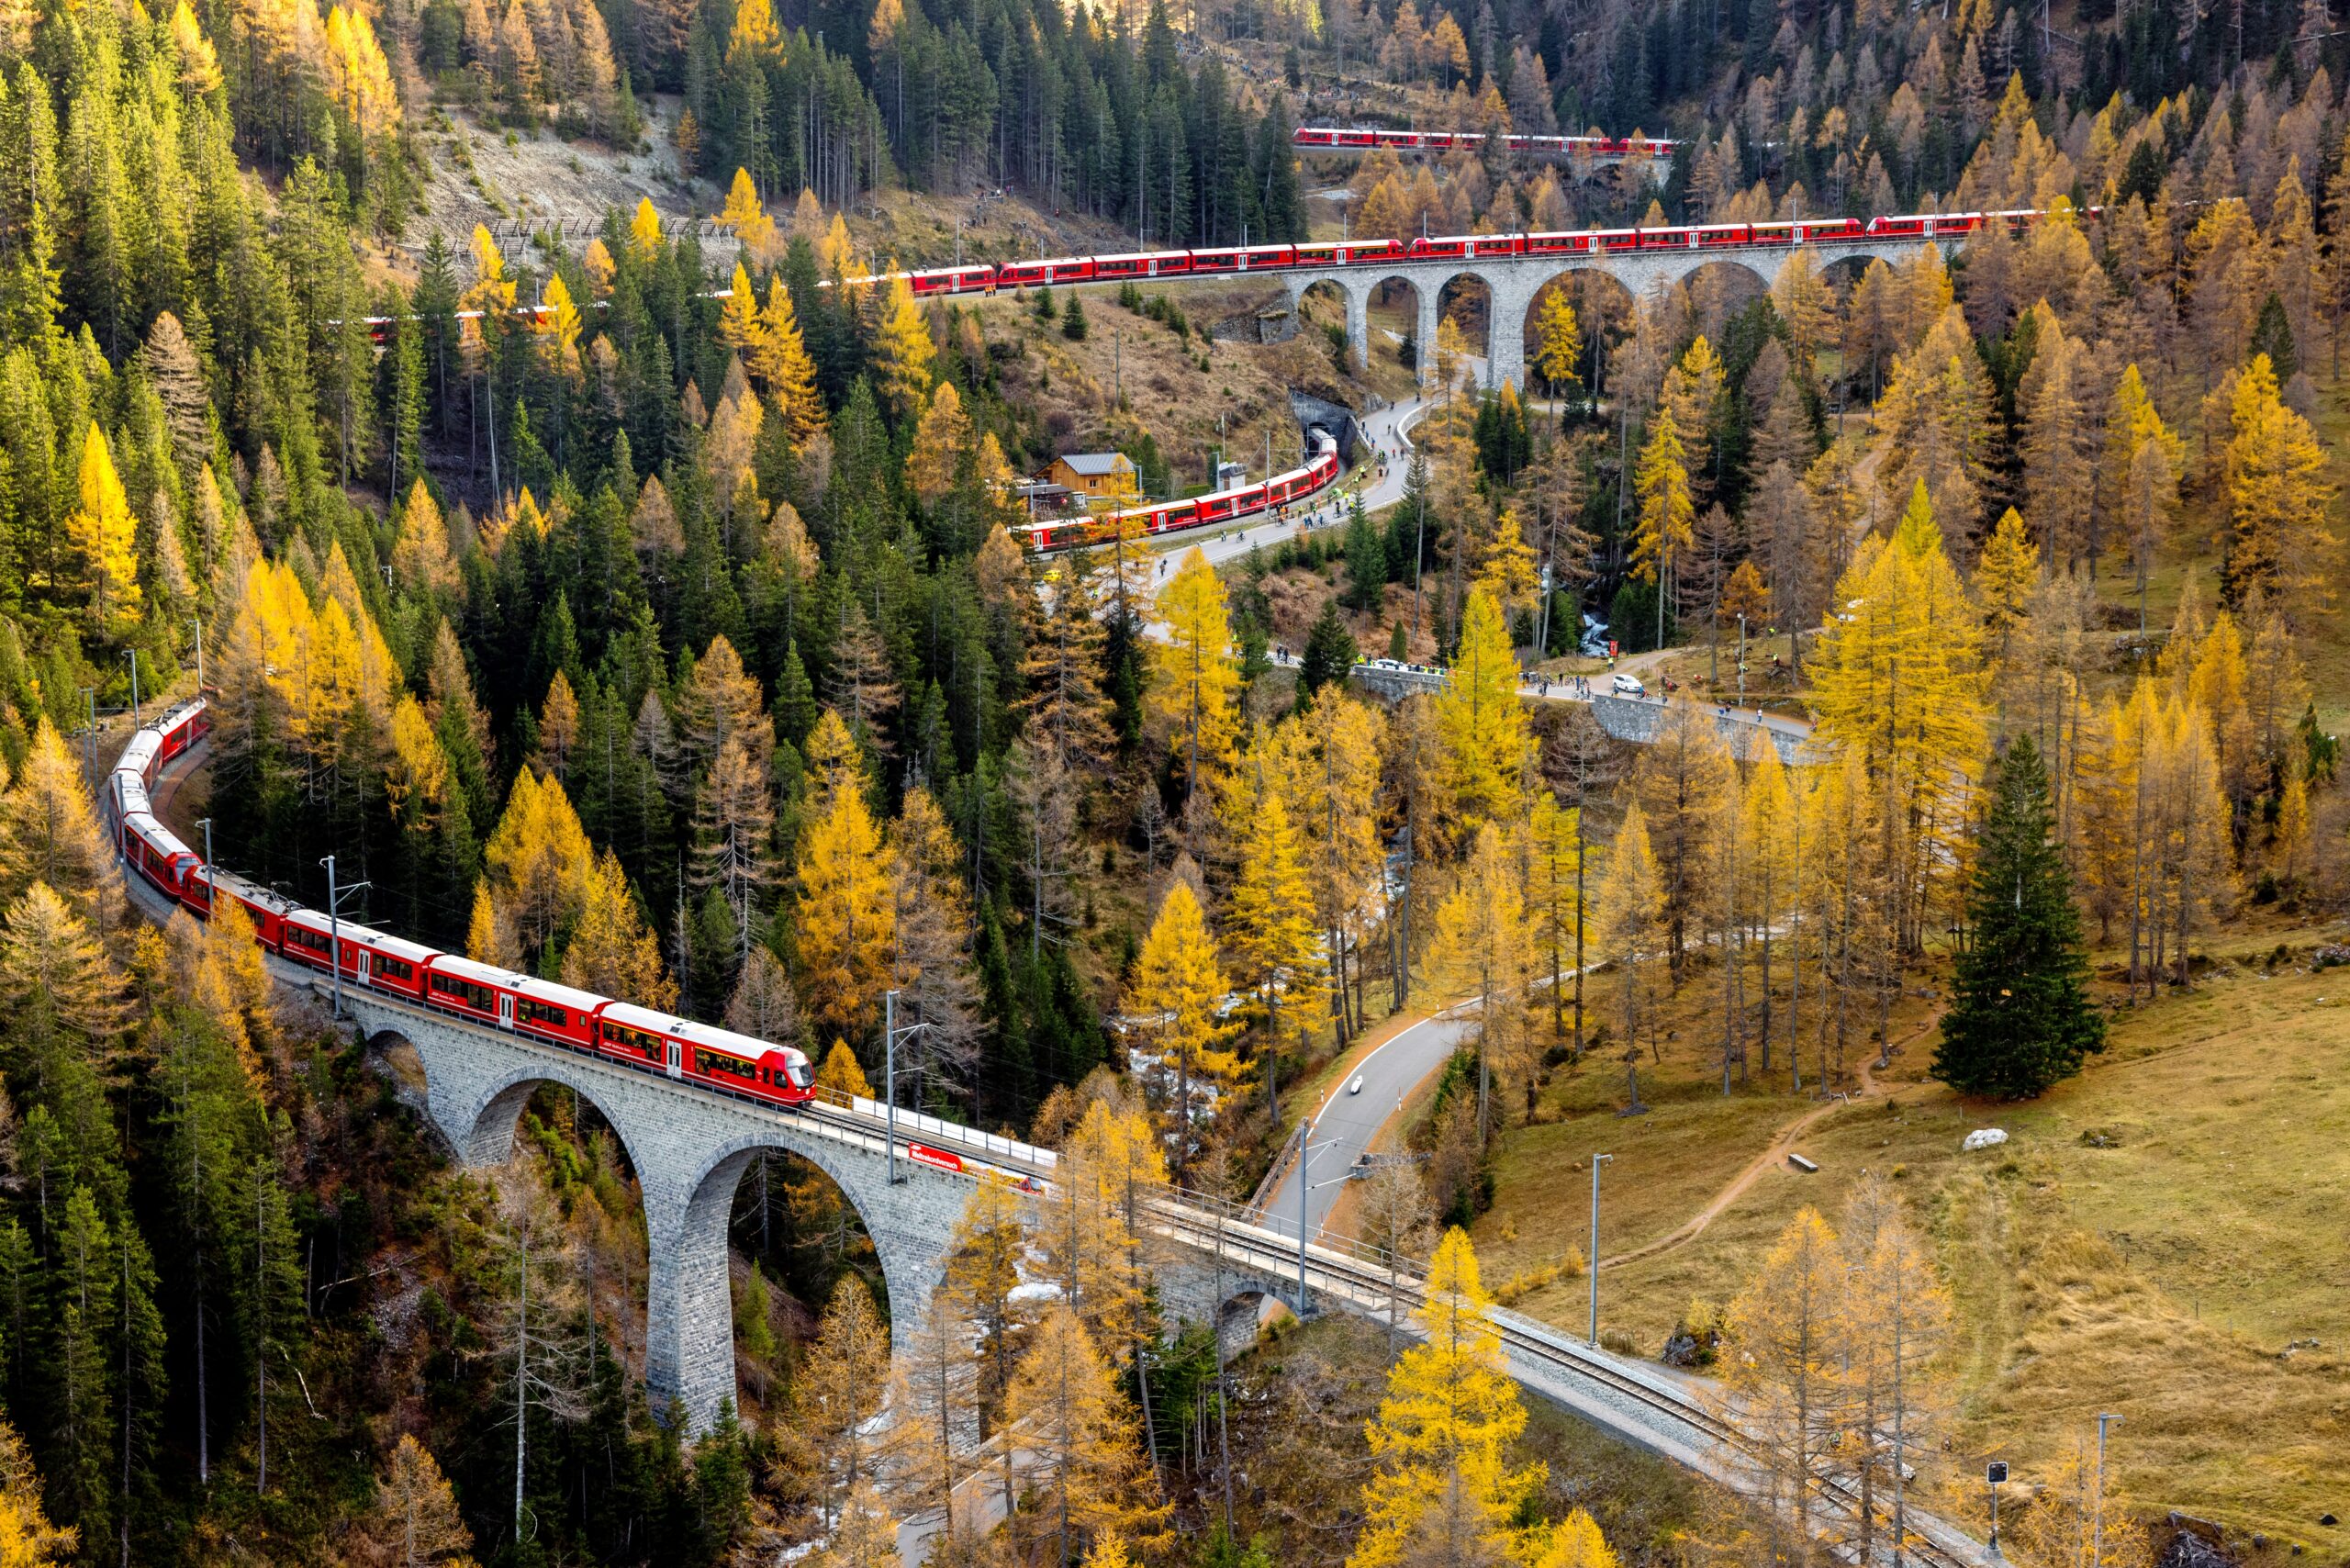 29 Oct 2022: Rhaetian Railway successfully breaks world record to run longest passenger train in the world